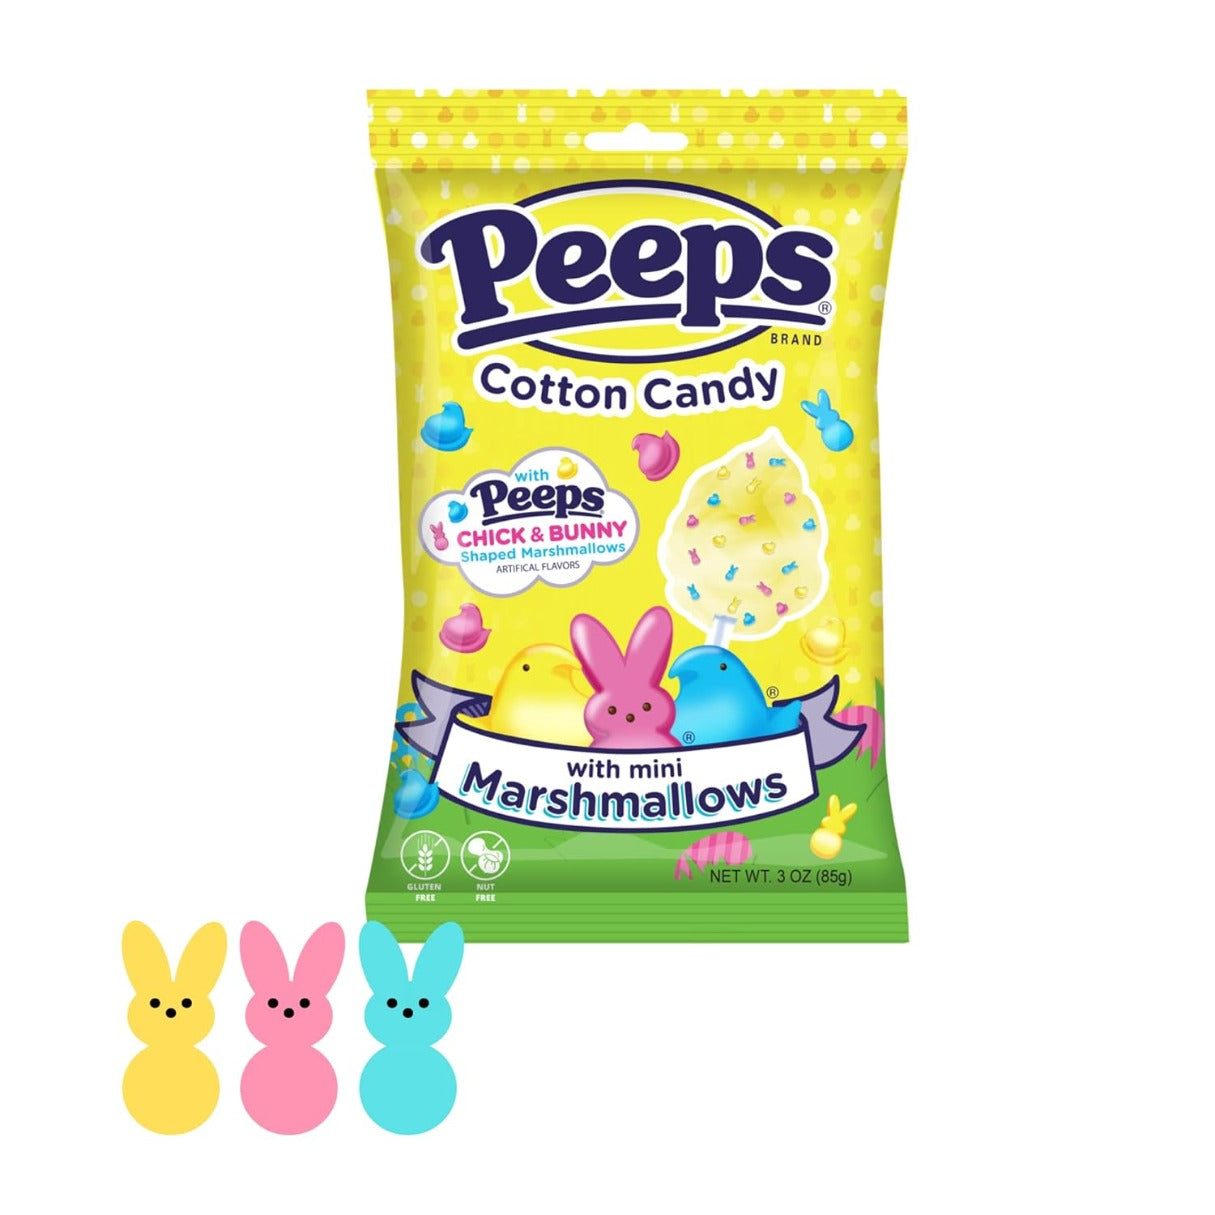 Peeps Cotton Candy With Mini Marshmallows Bag 3oz - 12ct